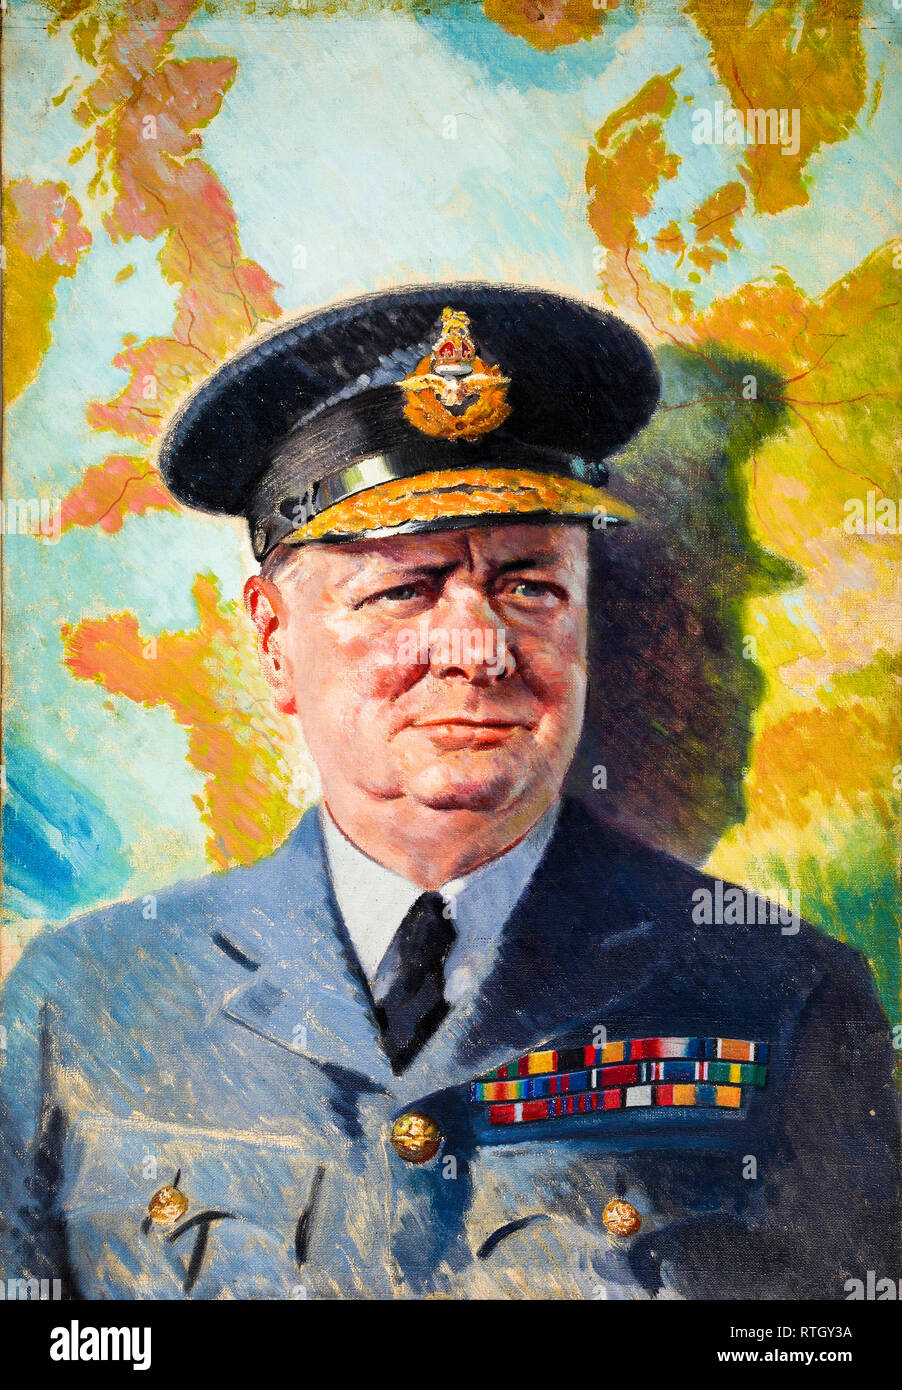 Winston Churchill in RAF uniform, portrait painting, c. 1940 Stock Photo